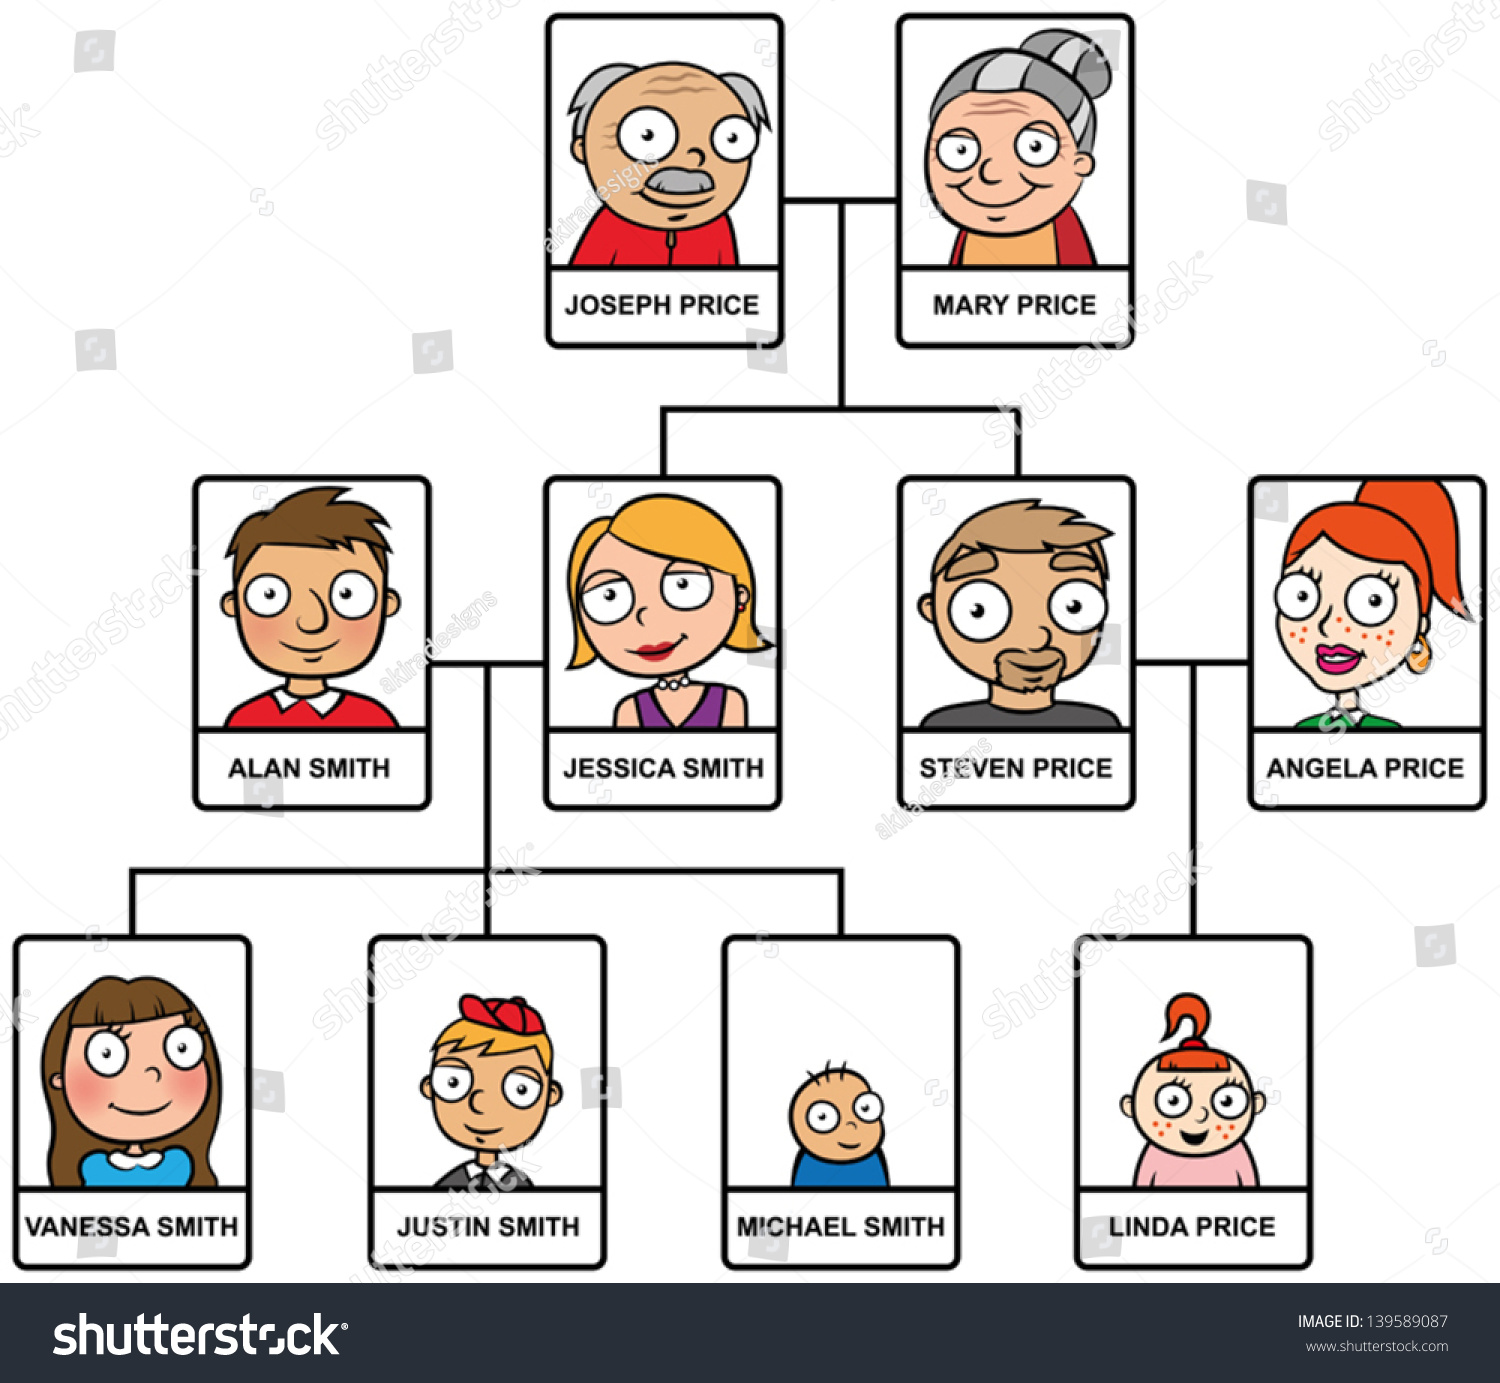 Family Tree in English с именами